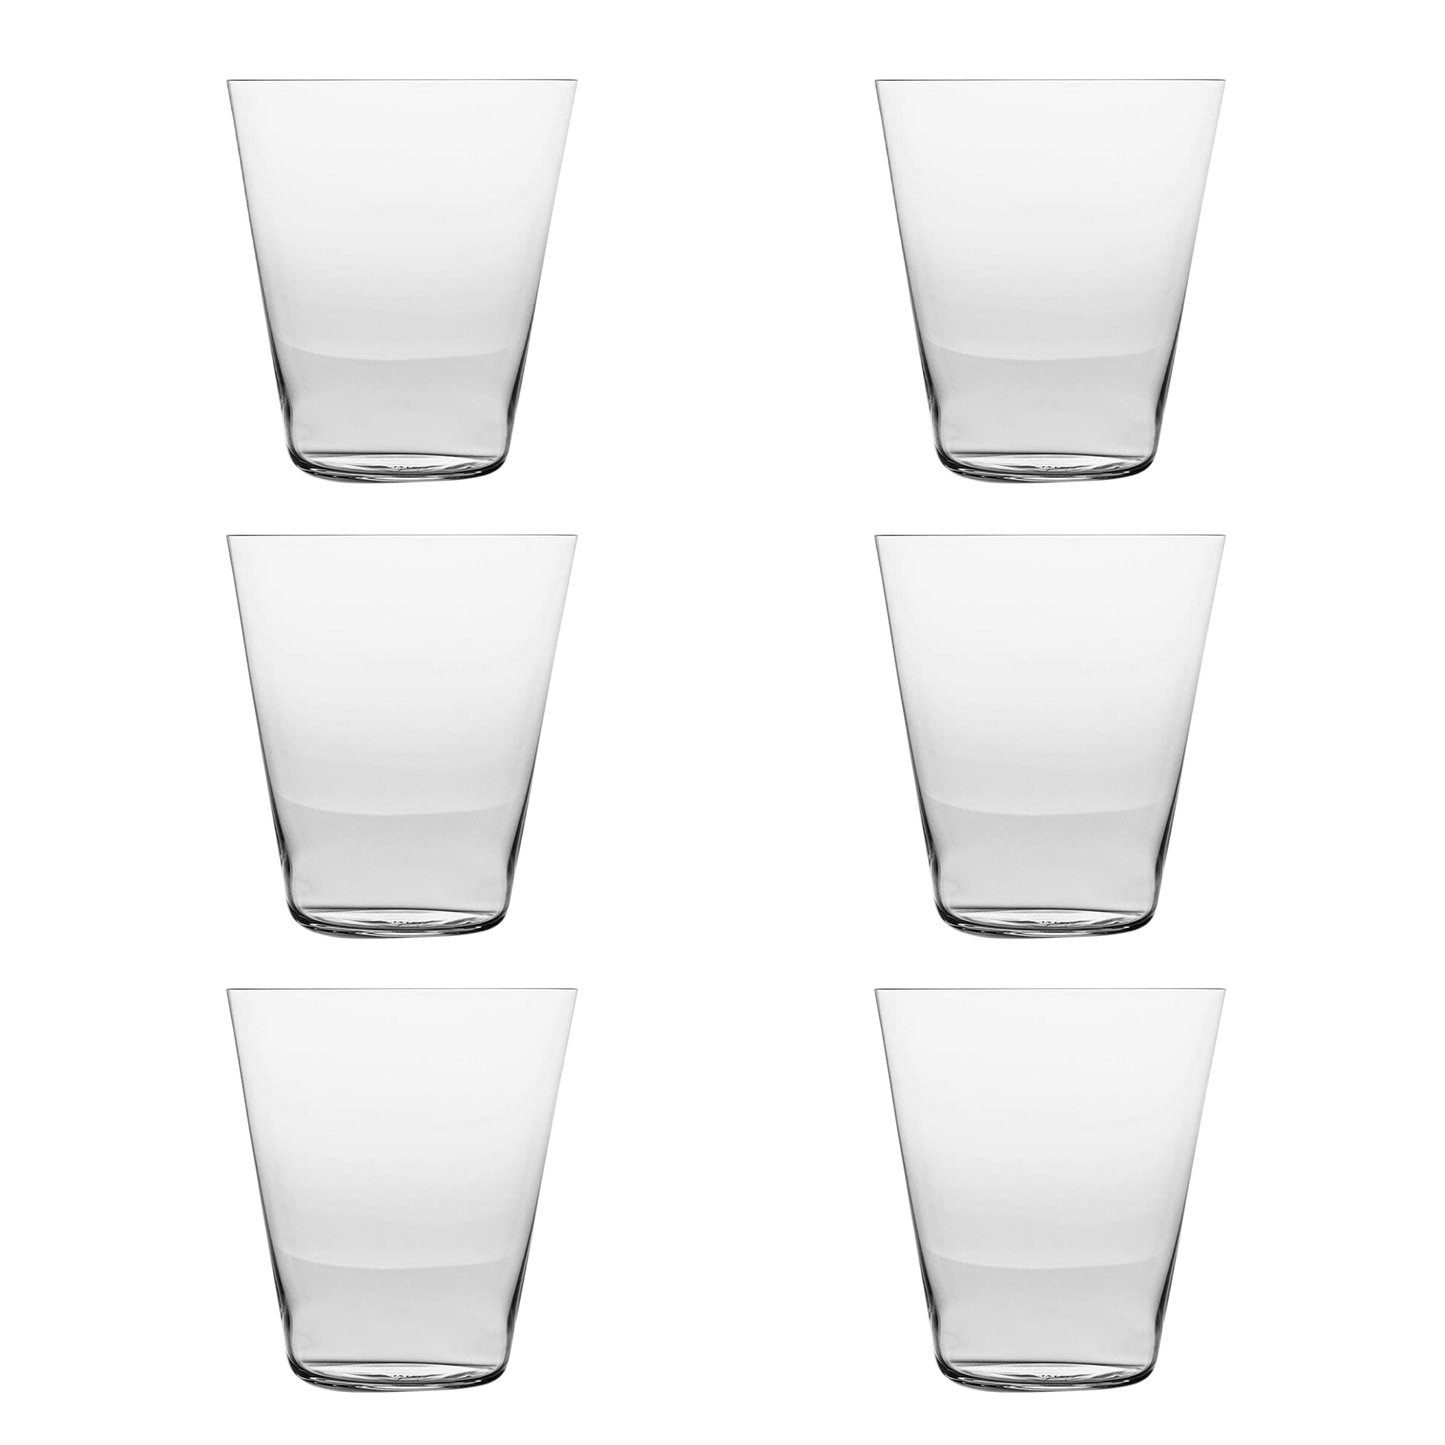 Zalto Denk'Art Cocktail / Tumbler Glass - 6 Glasses